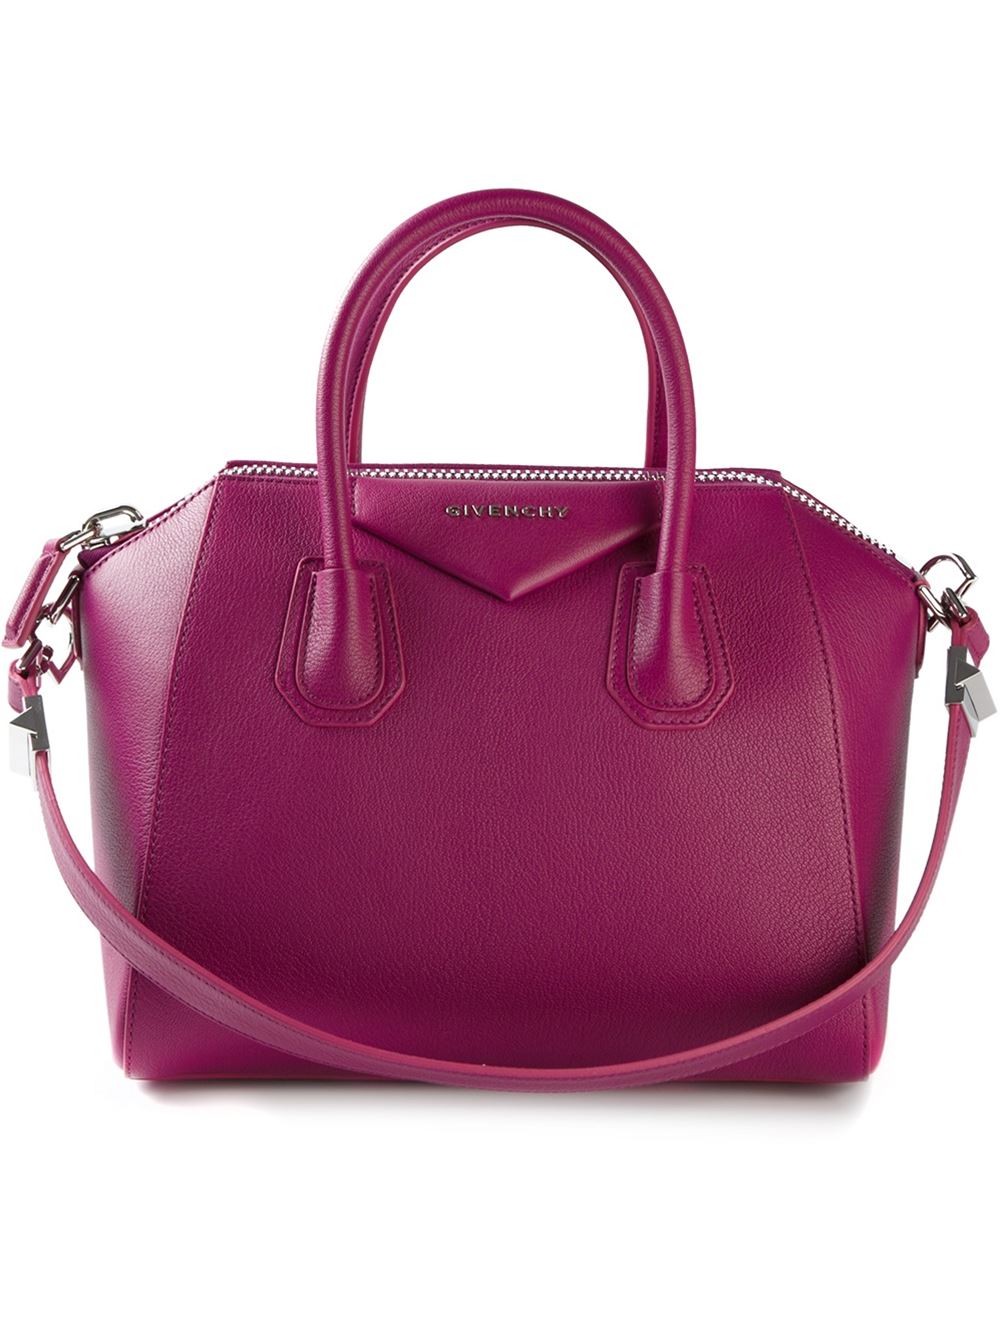 Givenchy Spring / Summer 2015 Antigona Tote Bags - Spotted Fashion